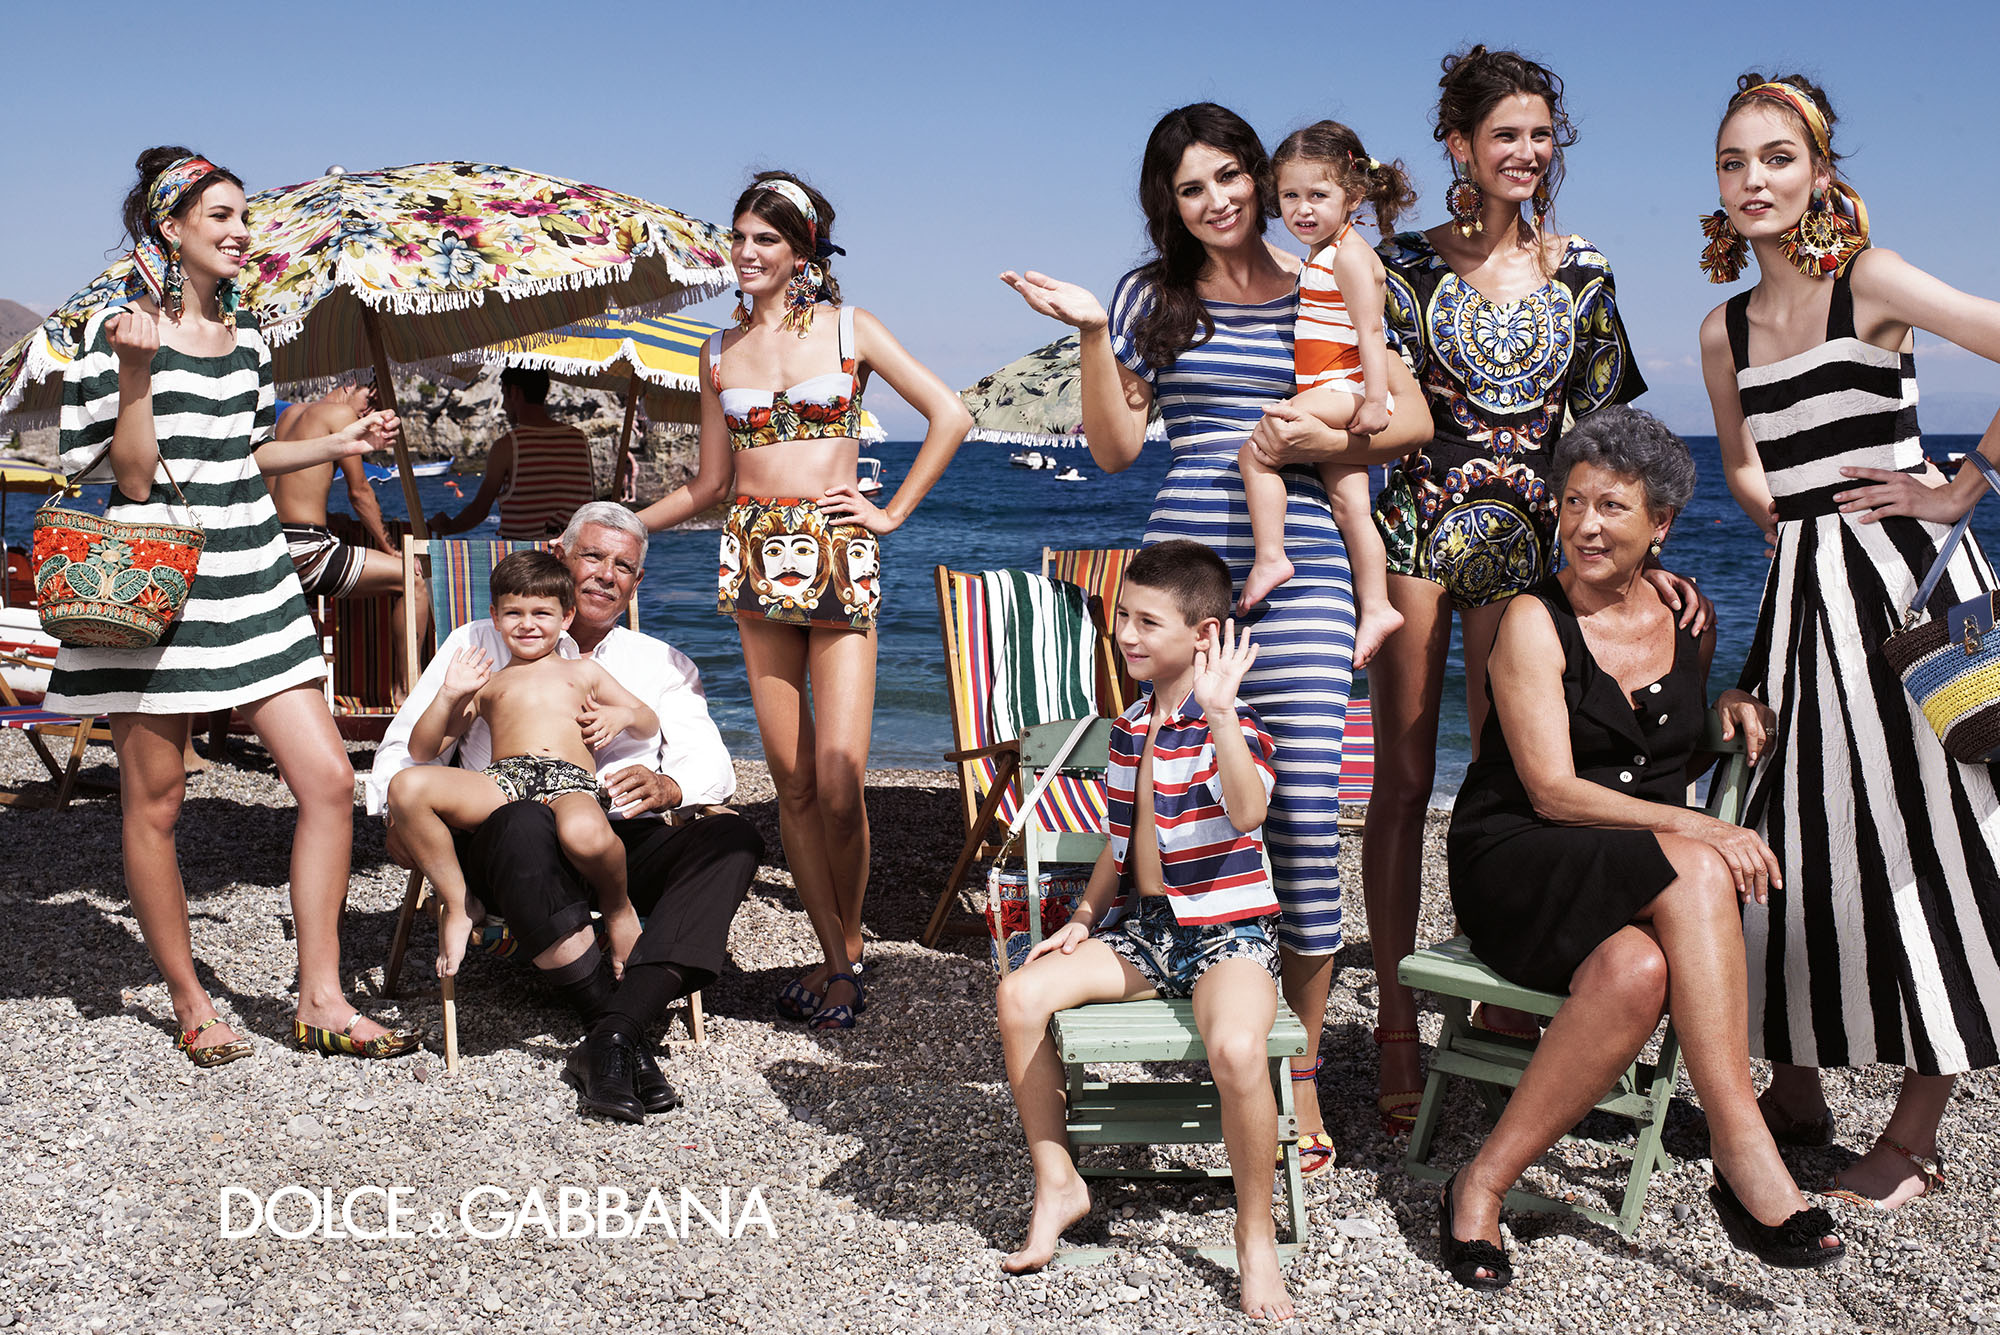 dolce gabbana adv campaign ss 2013 women 02